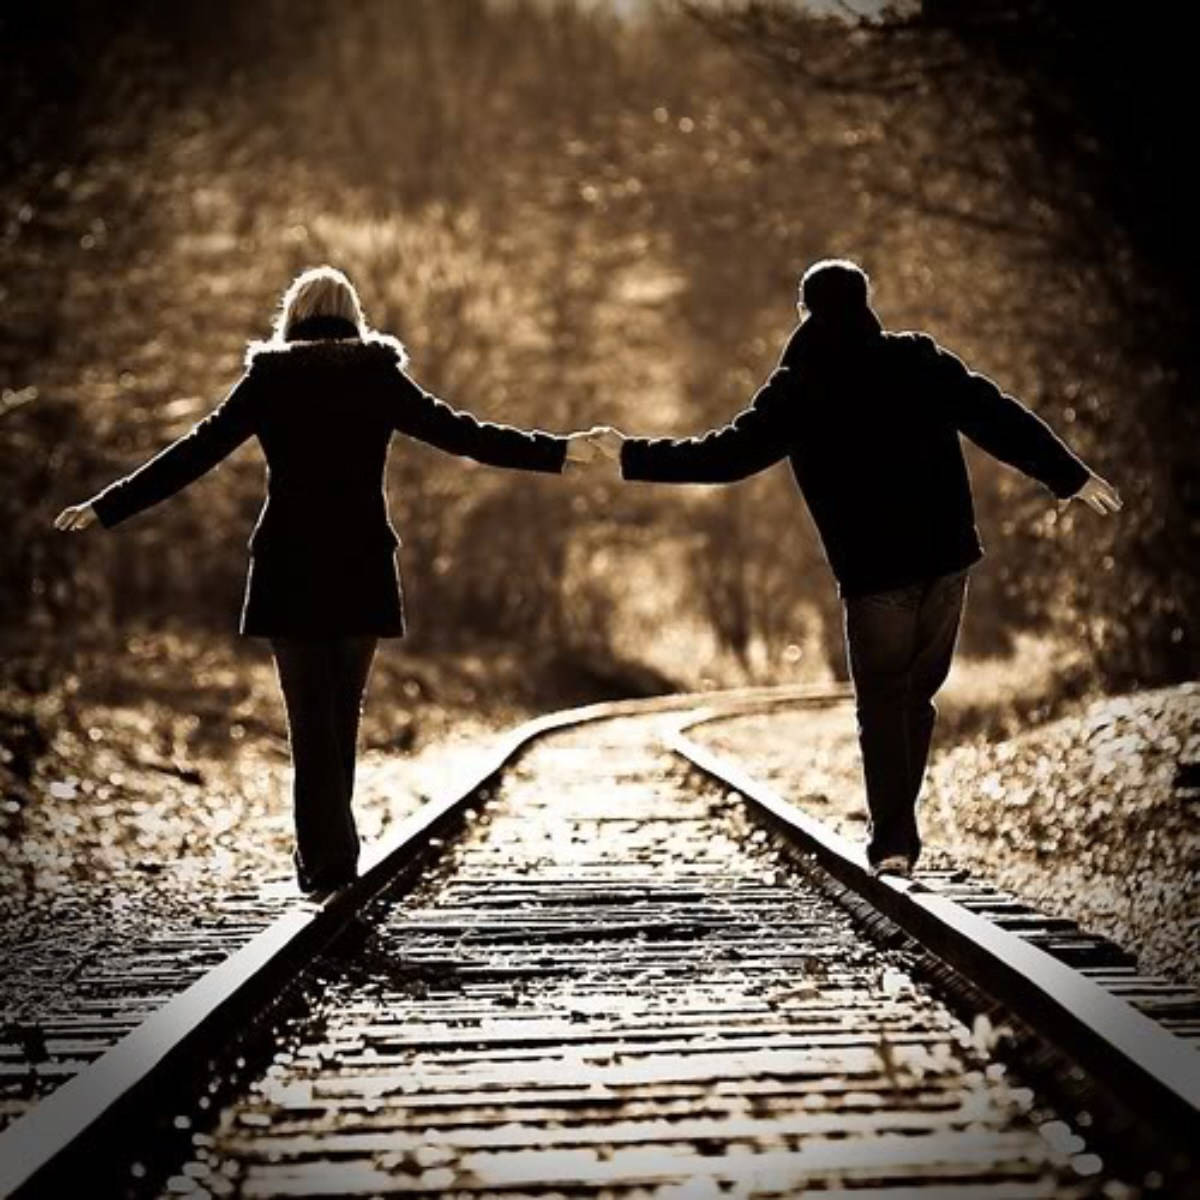 Walking Hand In Hand On A Railway Line Wallpaper